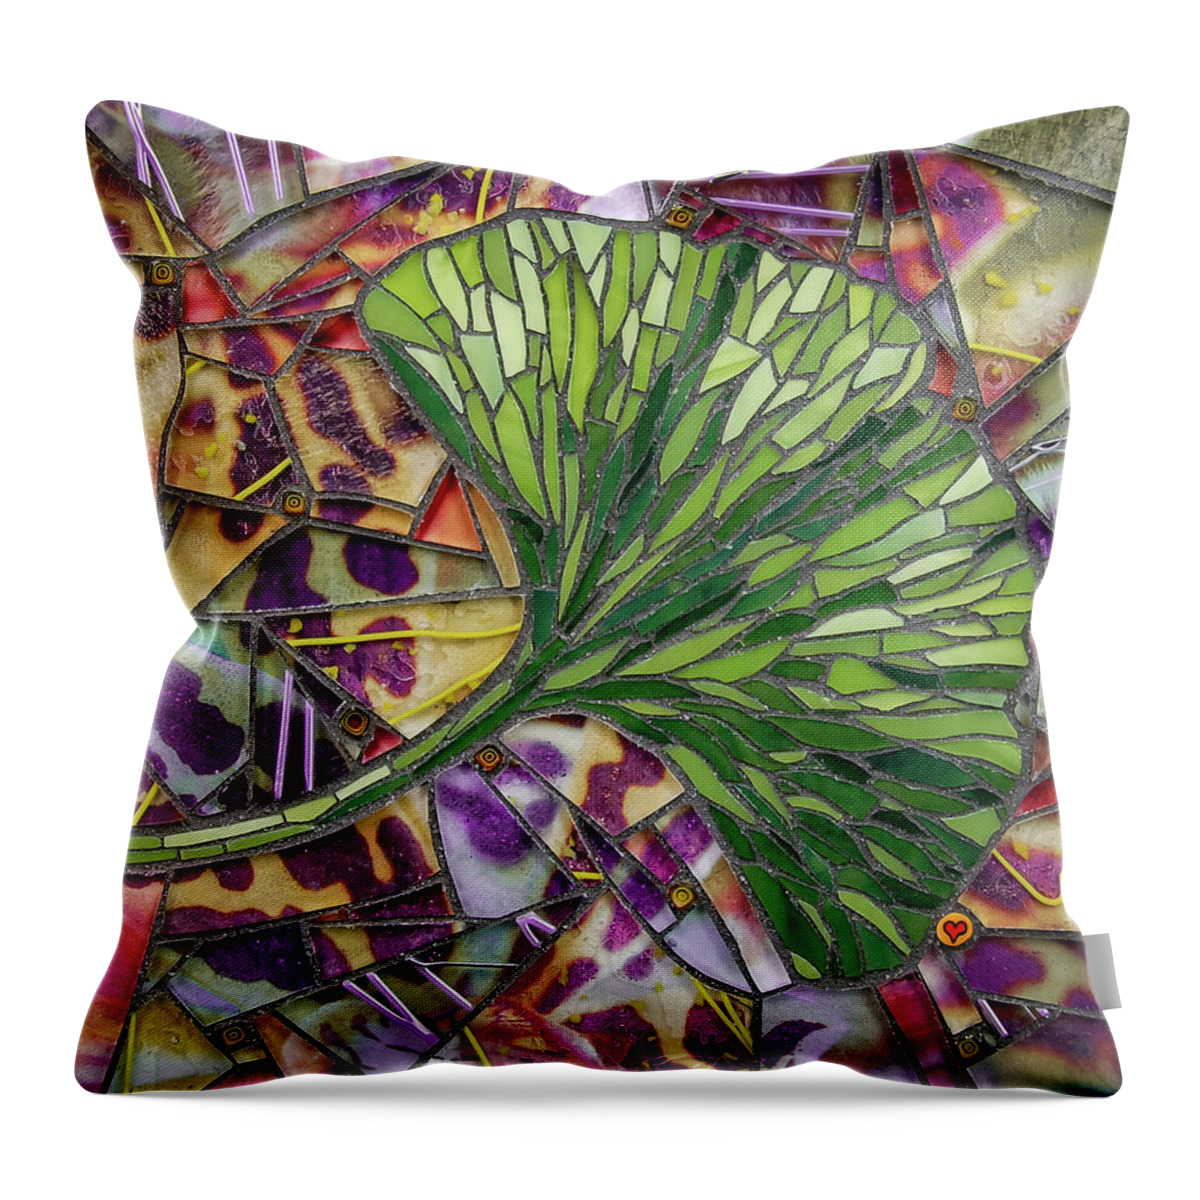 Ginkgo Throw Pillow featuring the glass art Ginkgo by Cherie Bosela